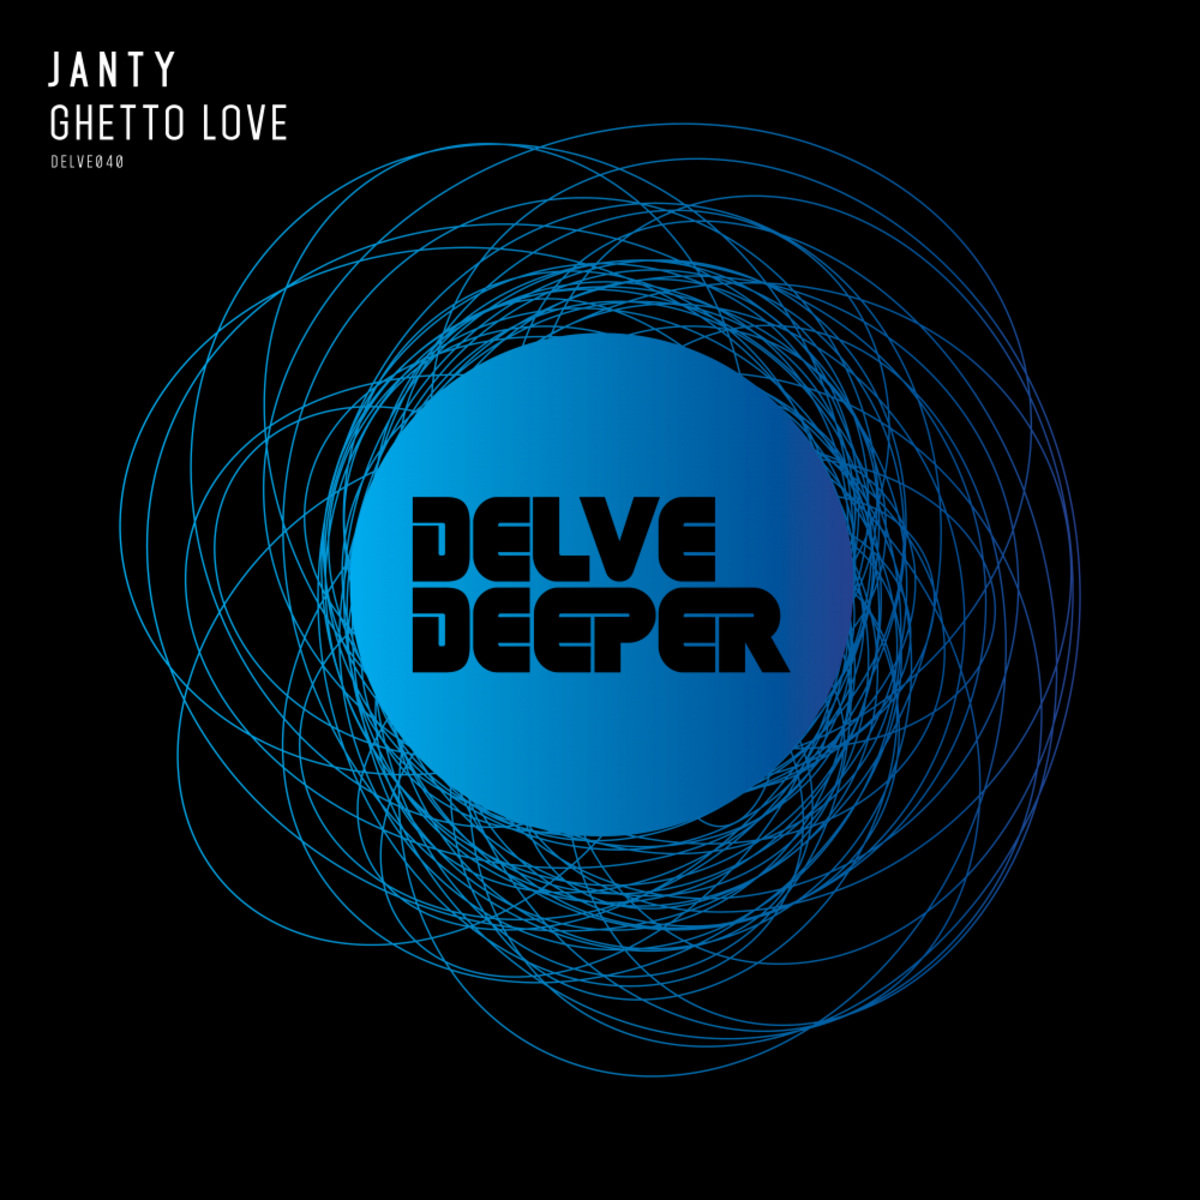 Janty - Ghetto Love / Delve Deeper Recordings